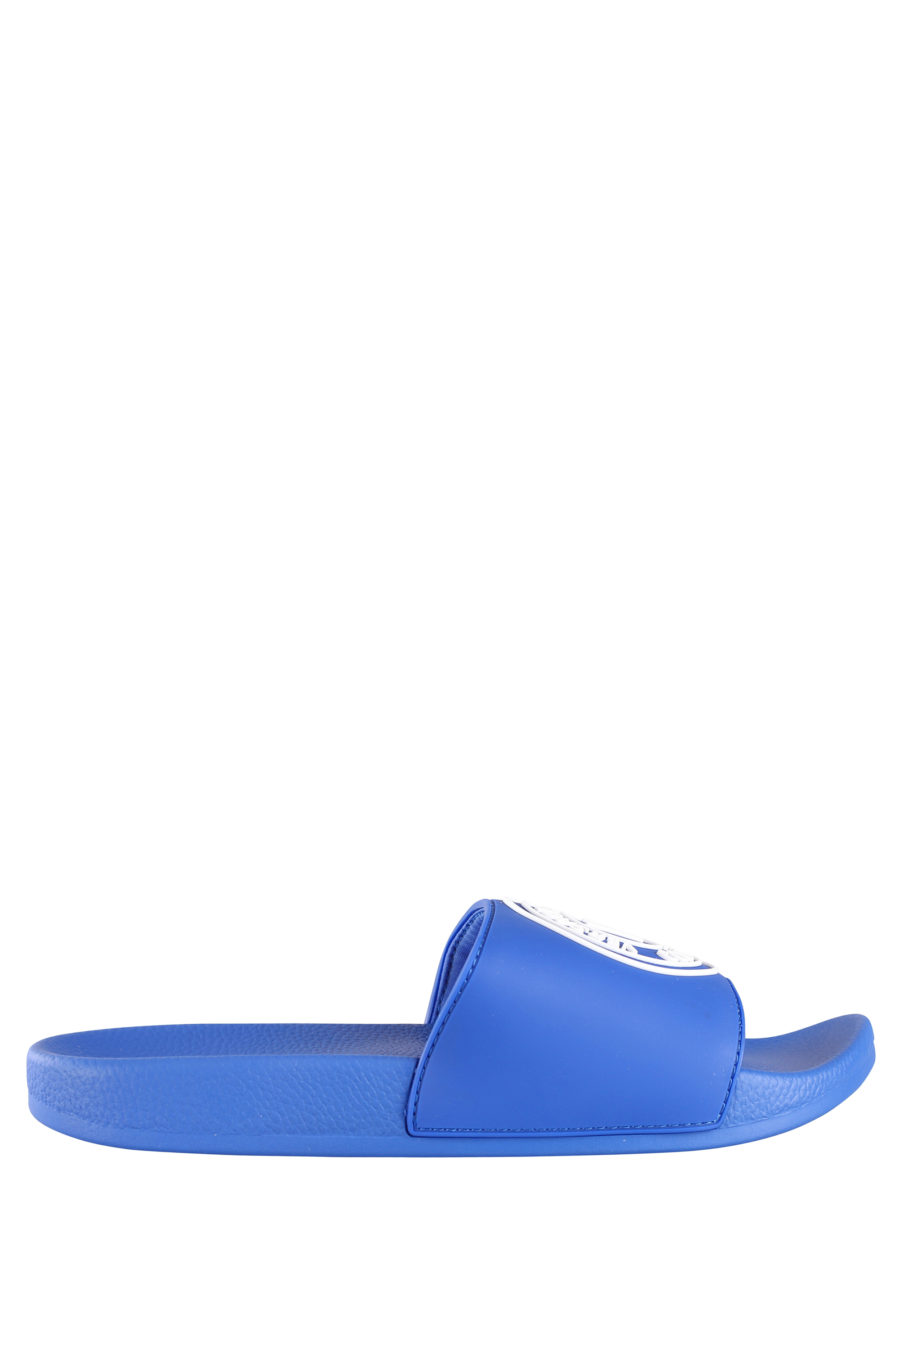 Blaue Flip Flops mit Kreislogo - IMG 9665